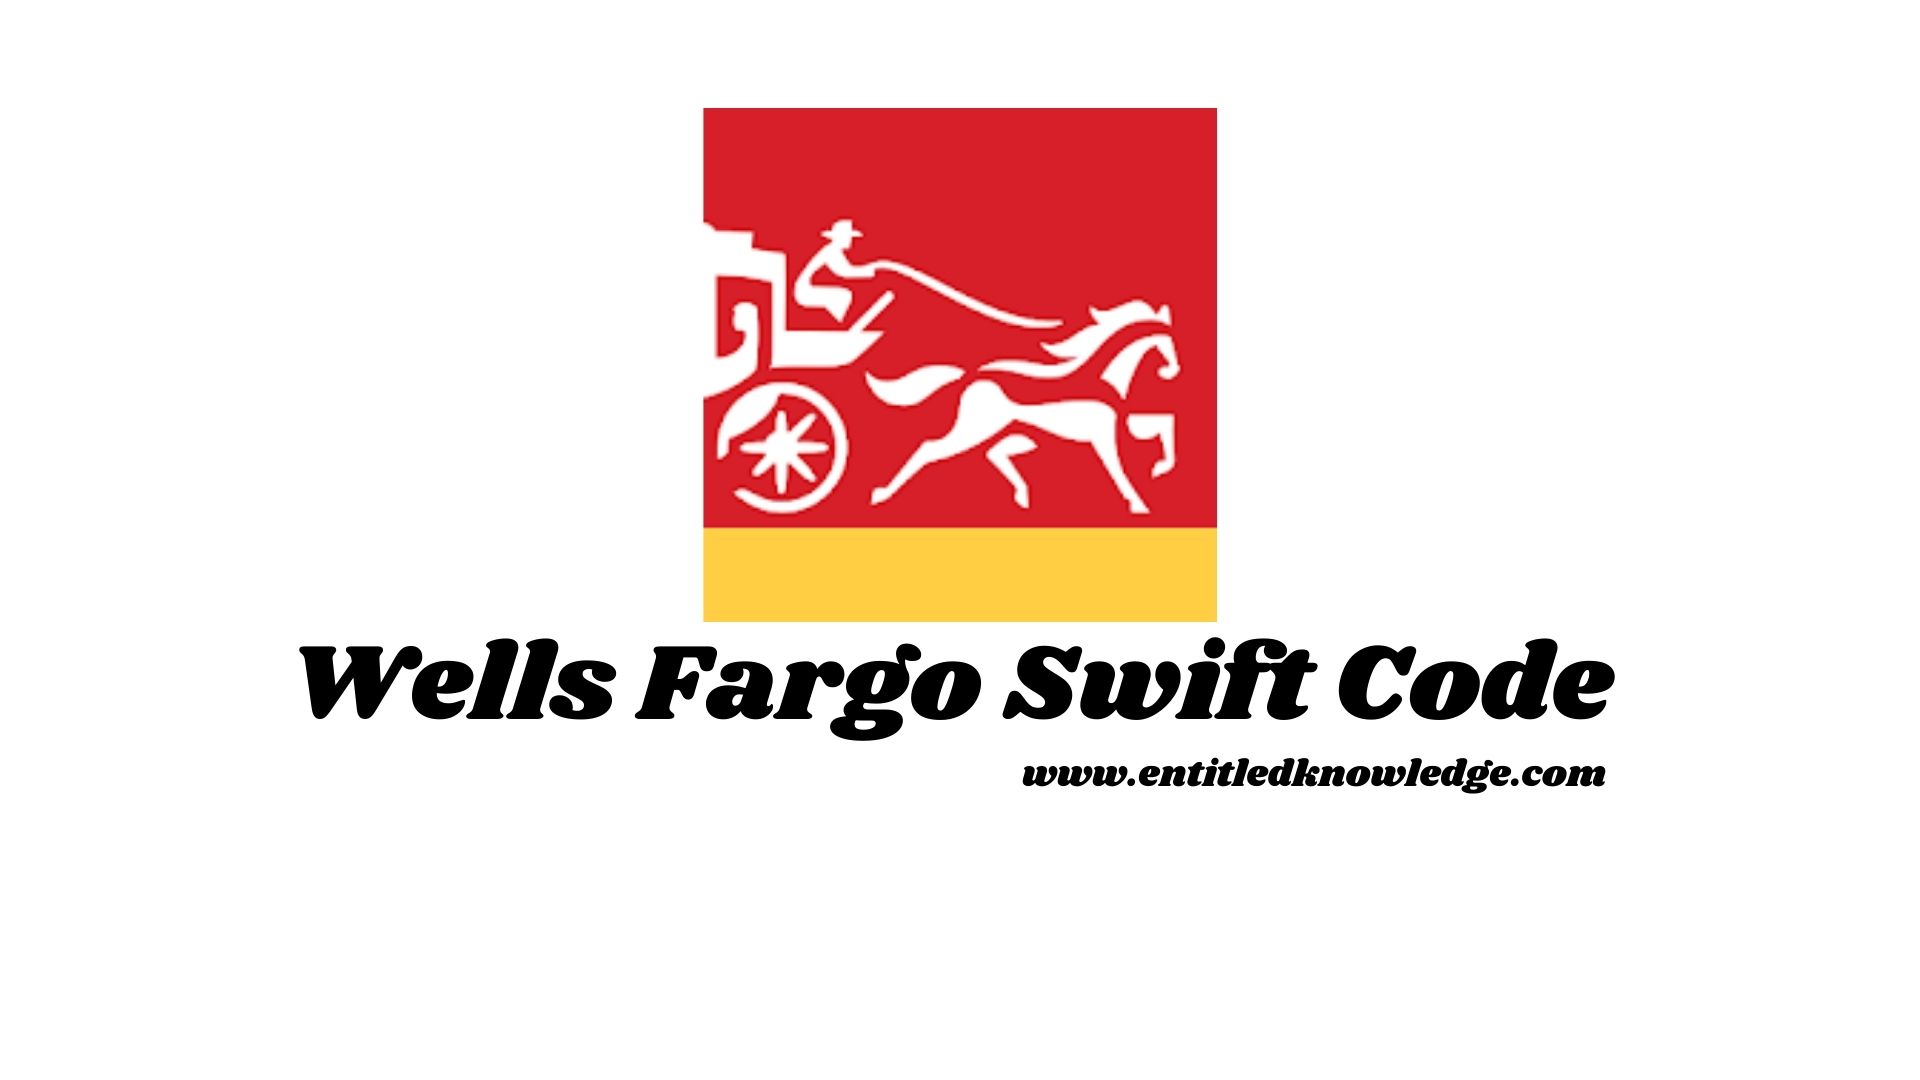 Wells Fargo Swift Code For International/Global Wire Transfer